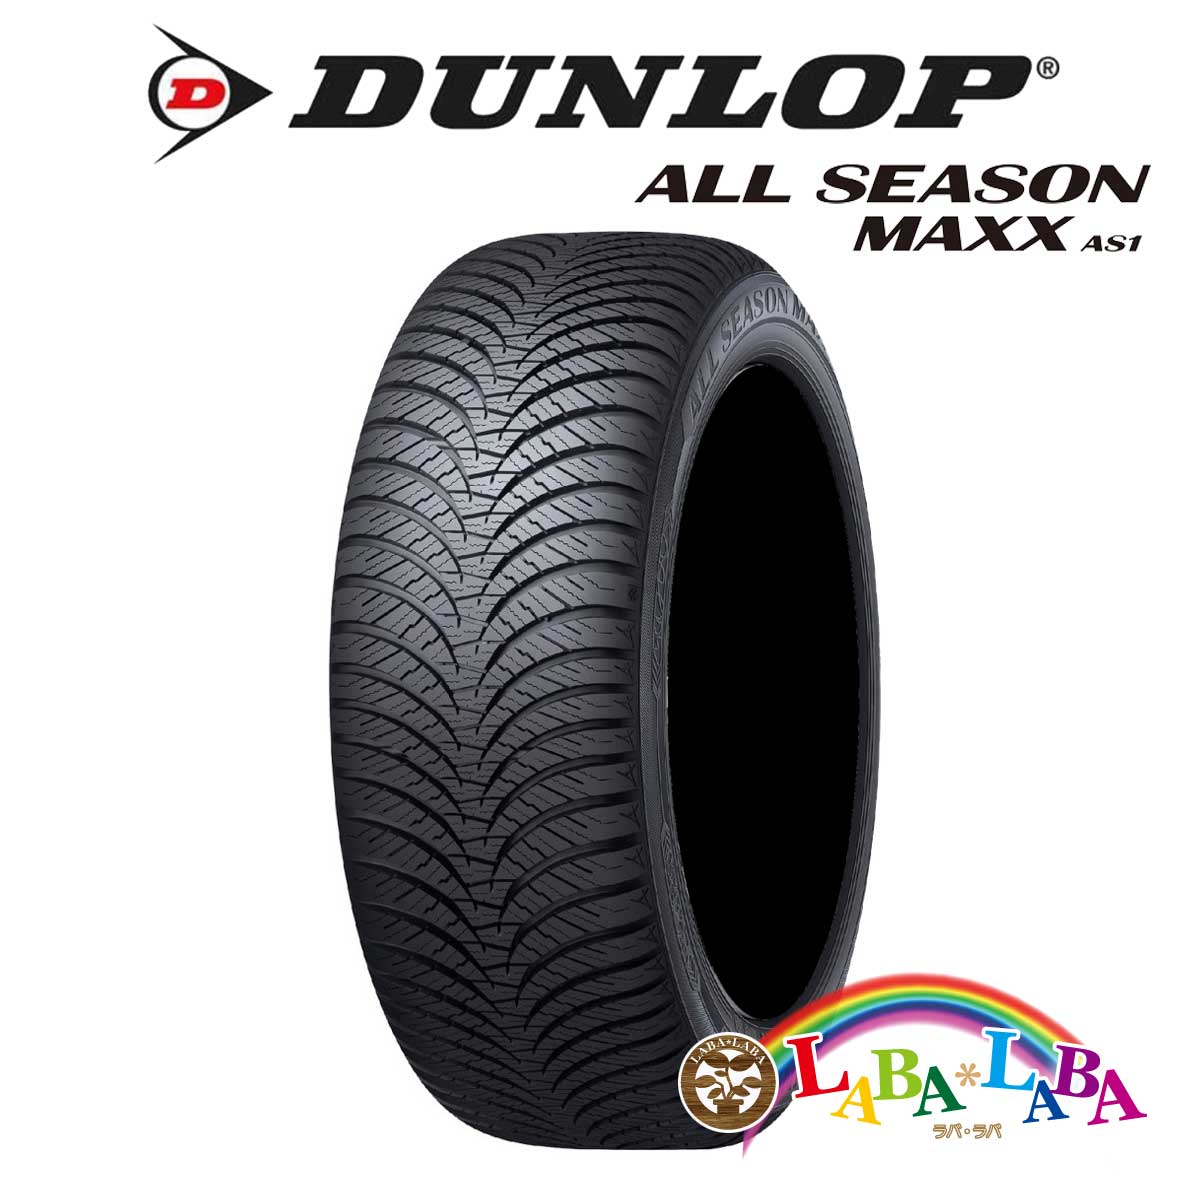 DUNLOP ダンロップ ALL SEASON MAXX AS1 175 70R14 84H オールシーズン 人気ブランド